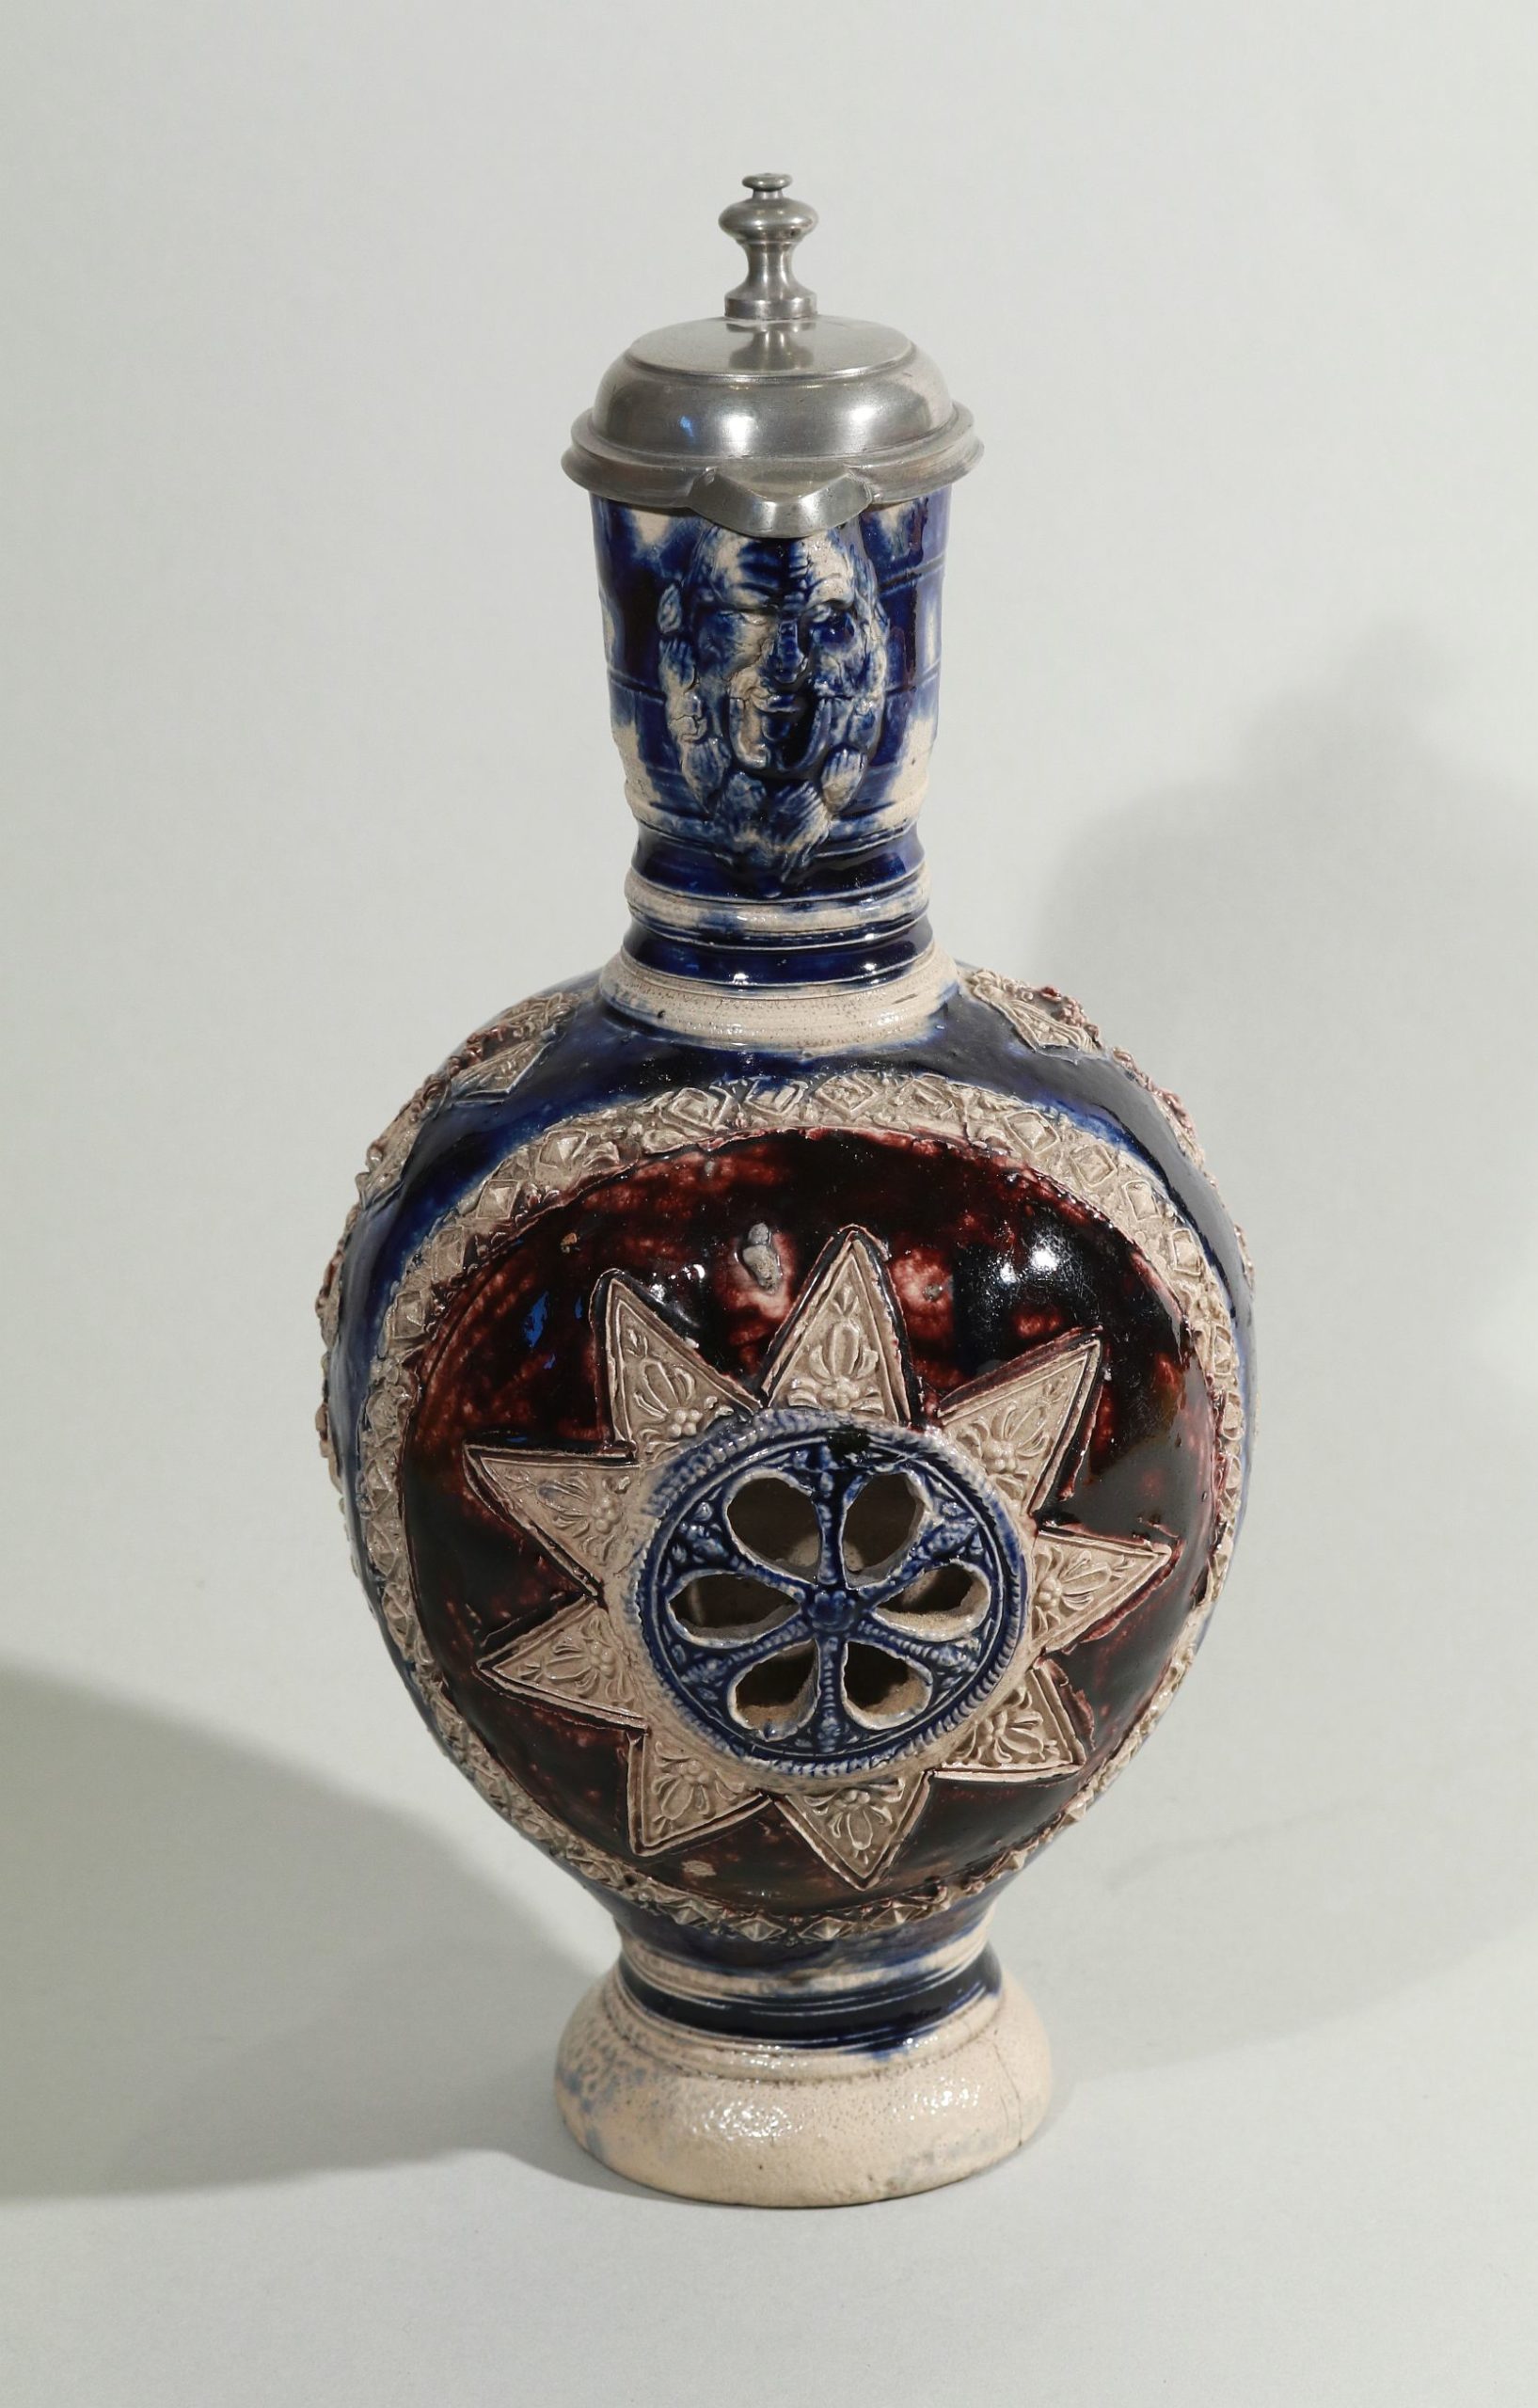 17th century-westerwald--sternkanne-um-1650 - blue and manganese salt glazed stoneware - jug